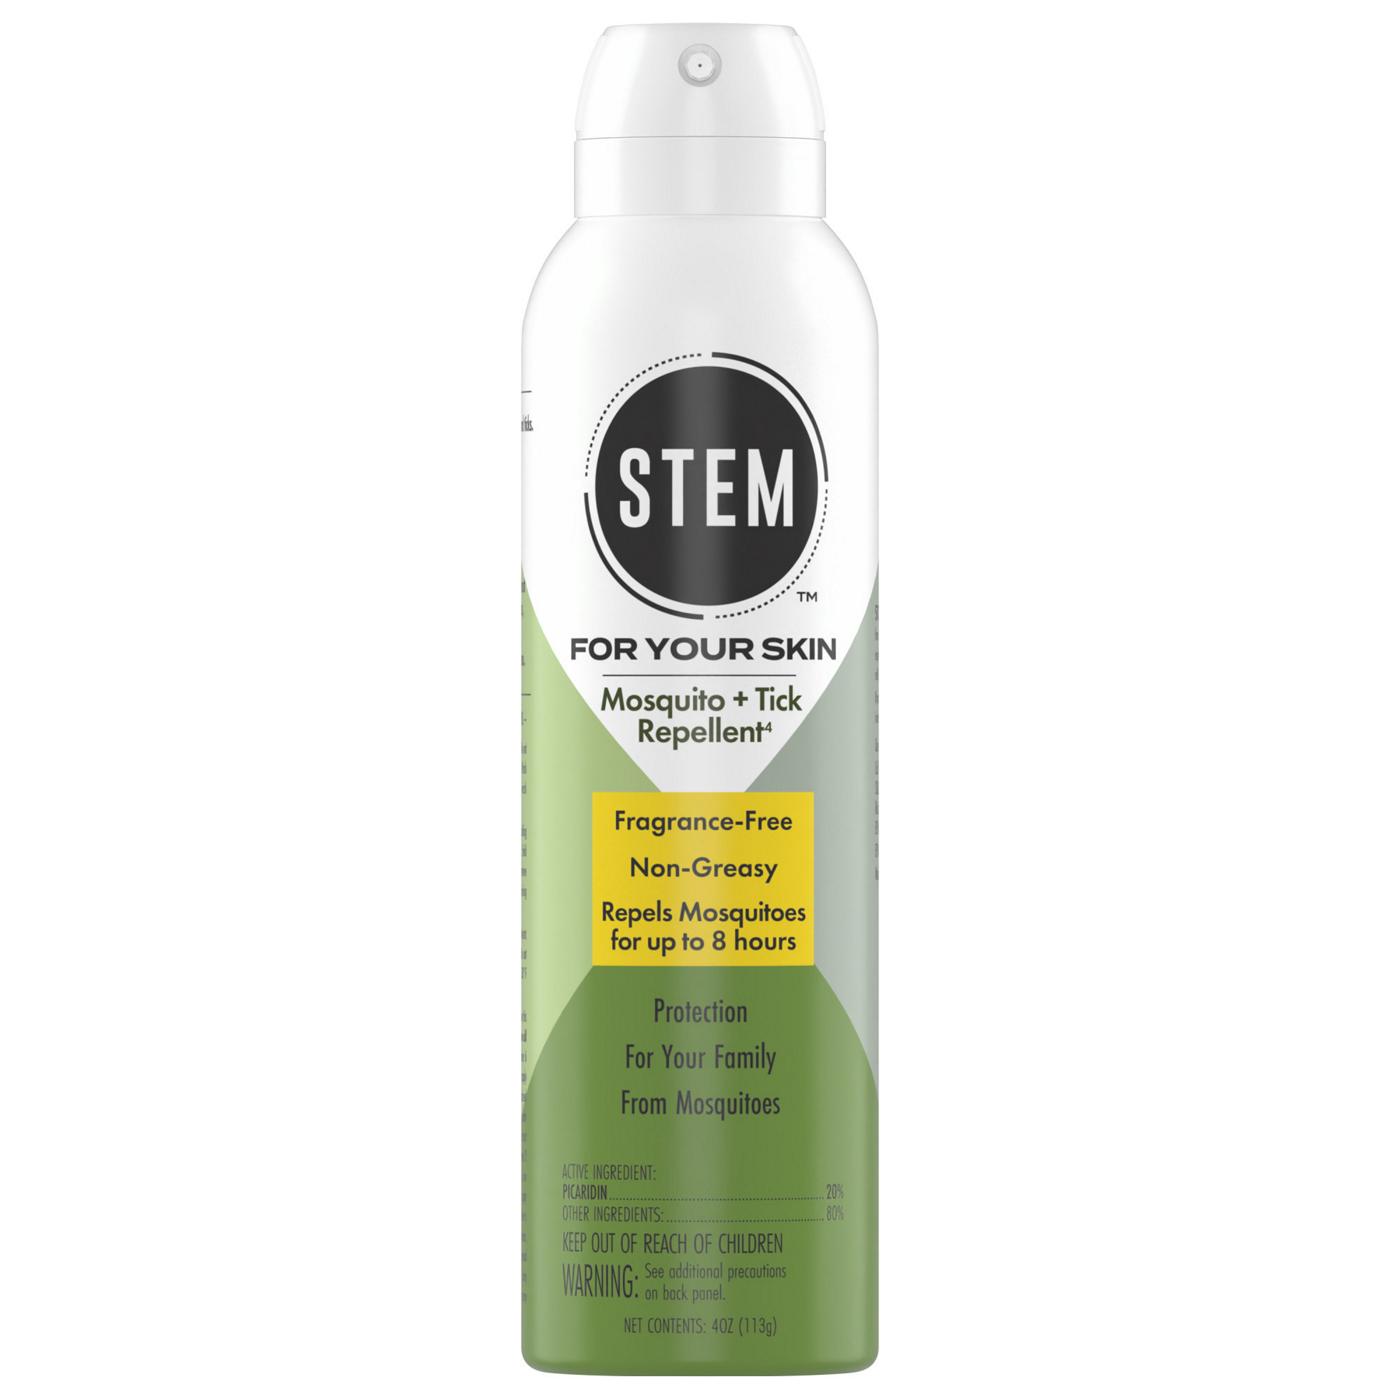 STEM Mosquito & Tick Repellent Bug Spray; image 1 of 2